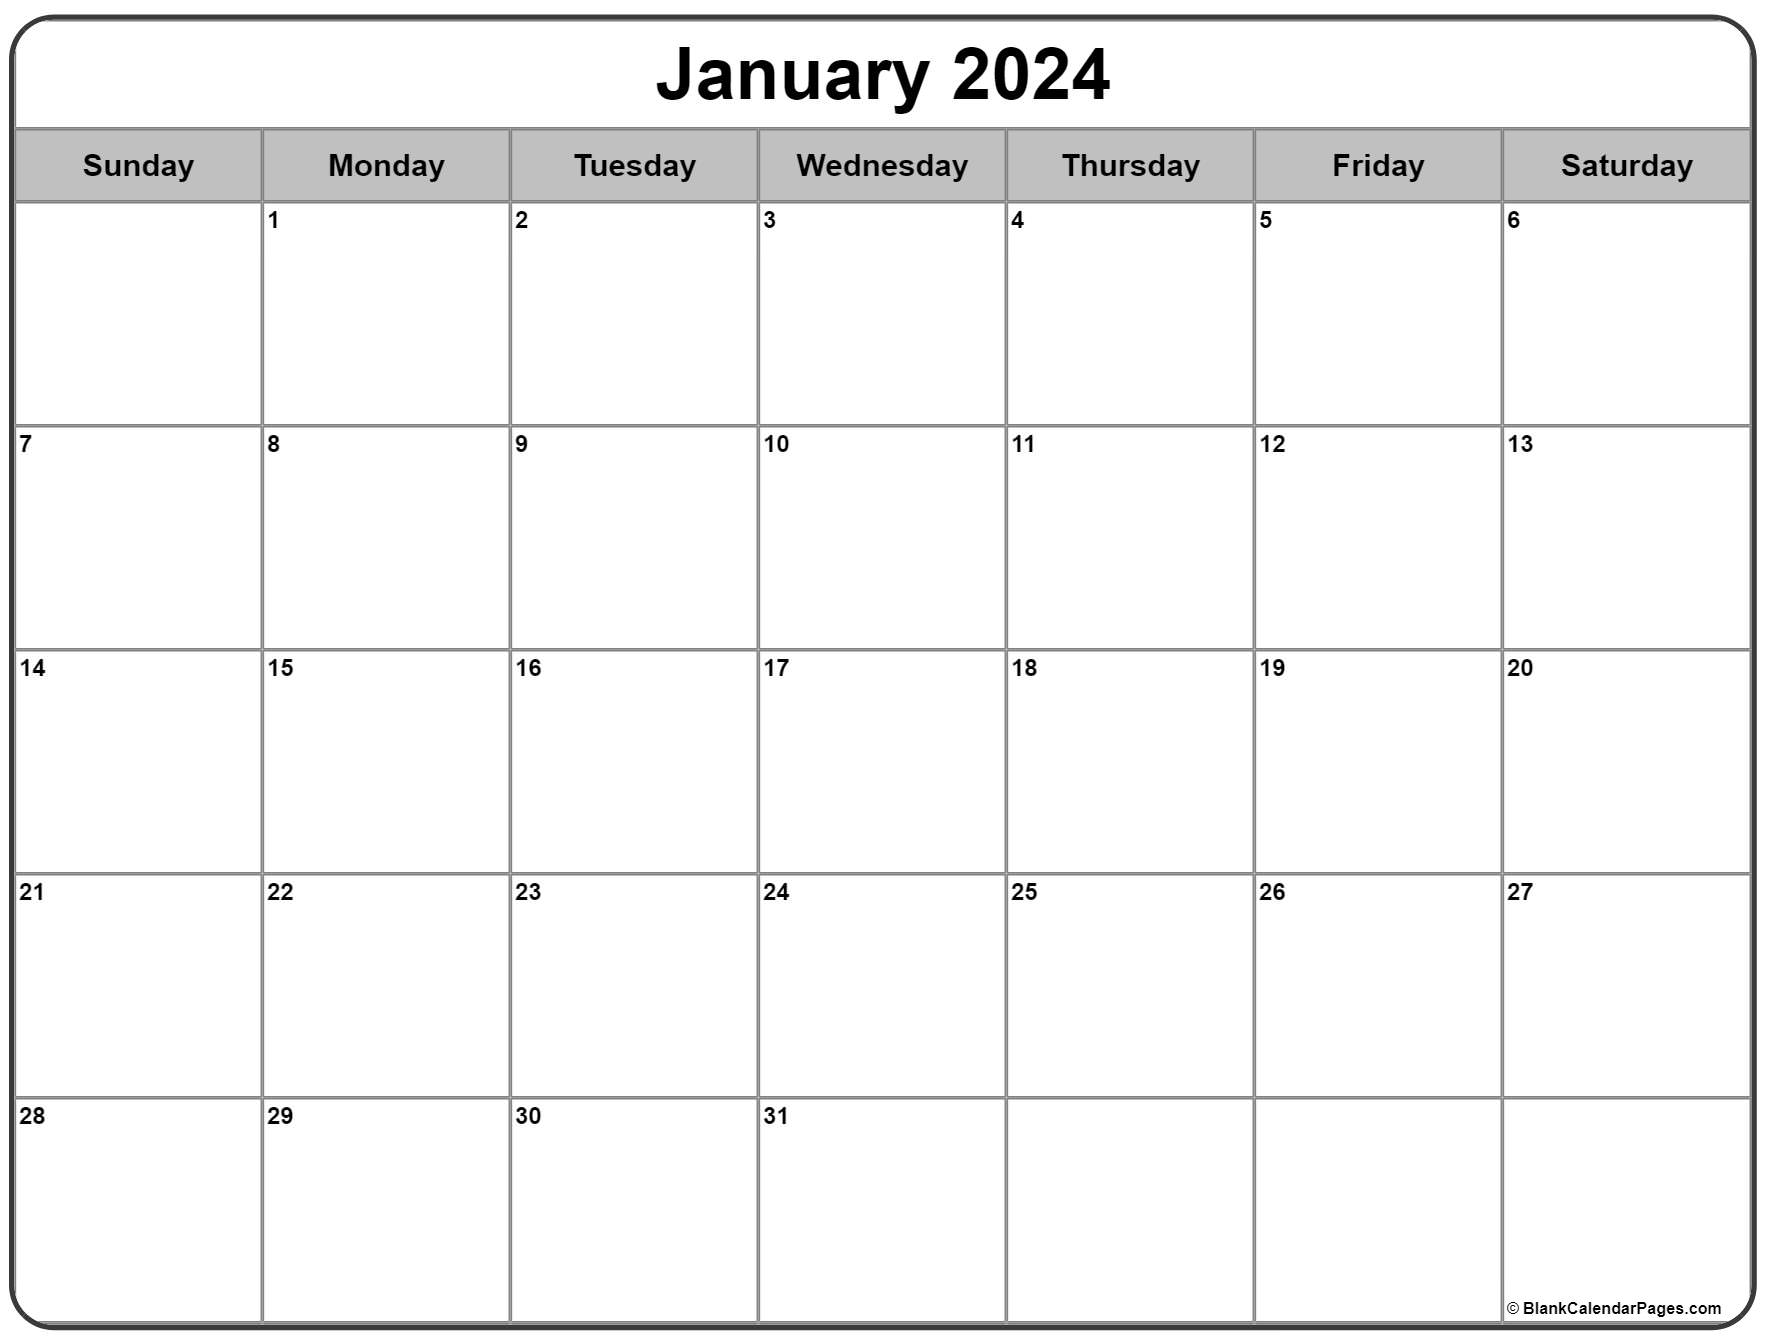 January 2024 calendar | free printable calendar